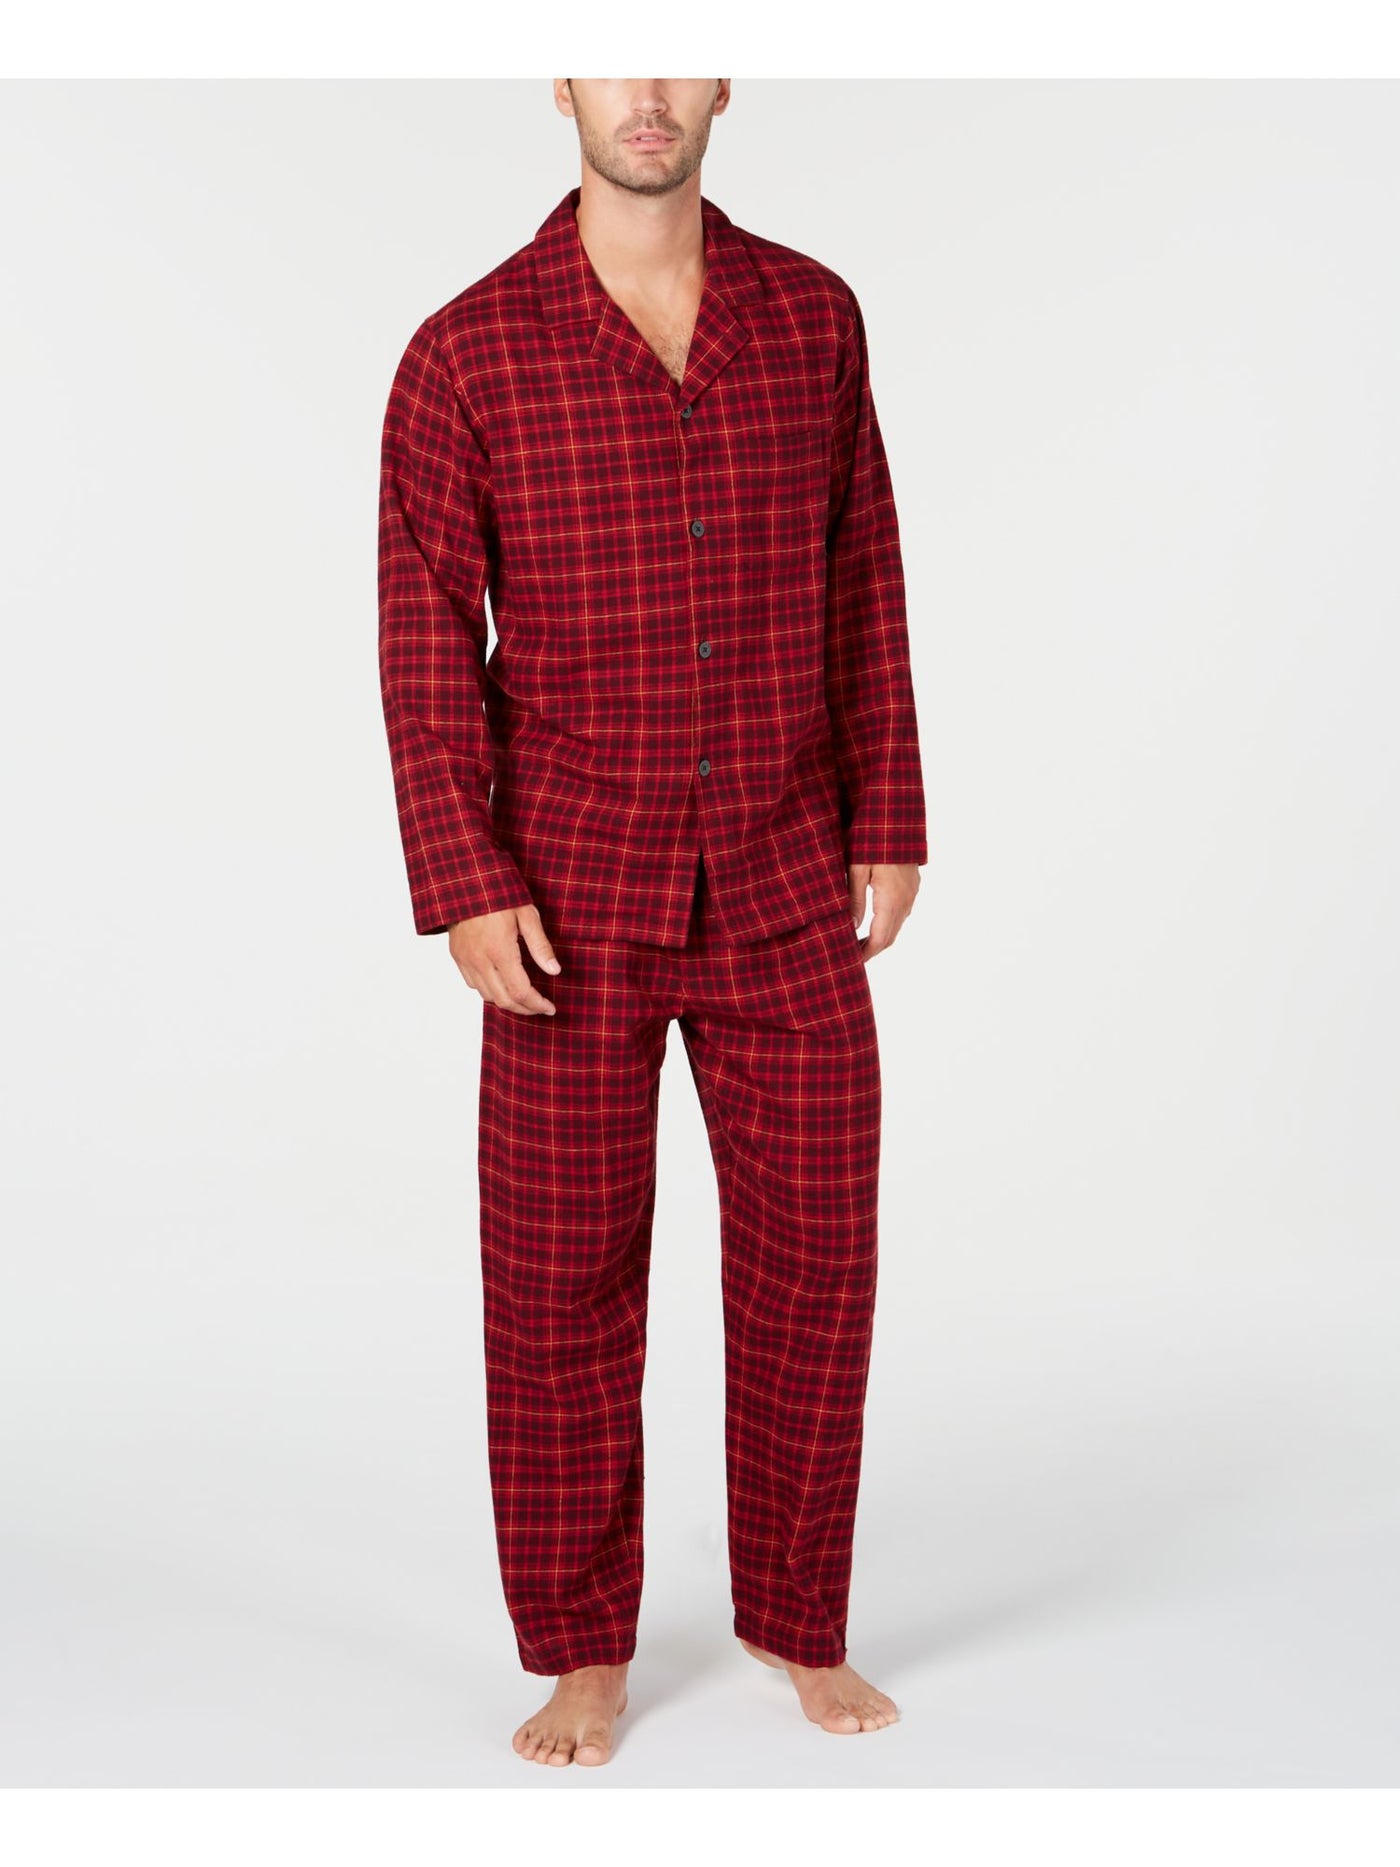 CLUBROOM Mens Red Plaid Elastic Band Button Up Top Straight leg Pants Pajamas M